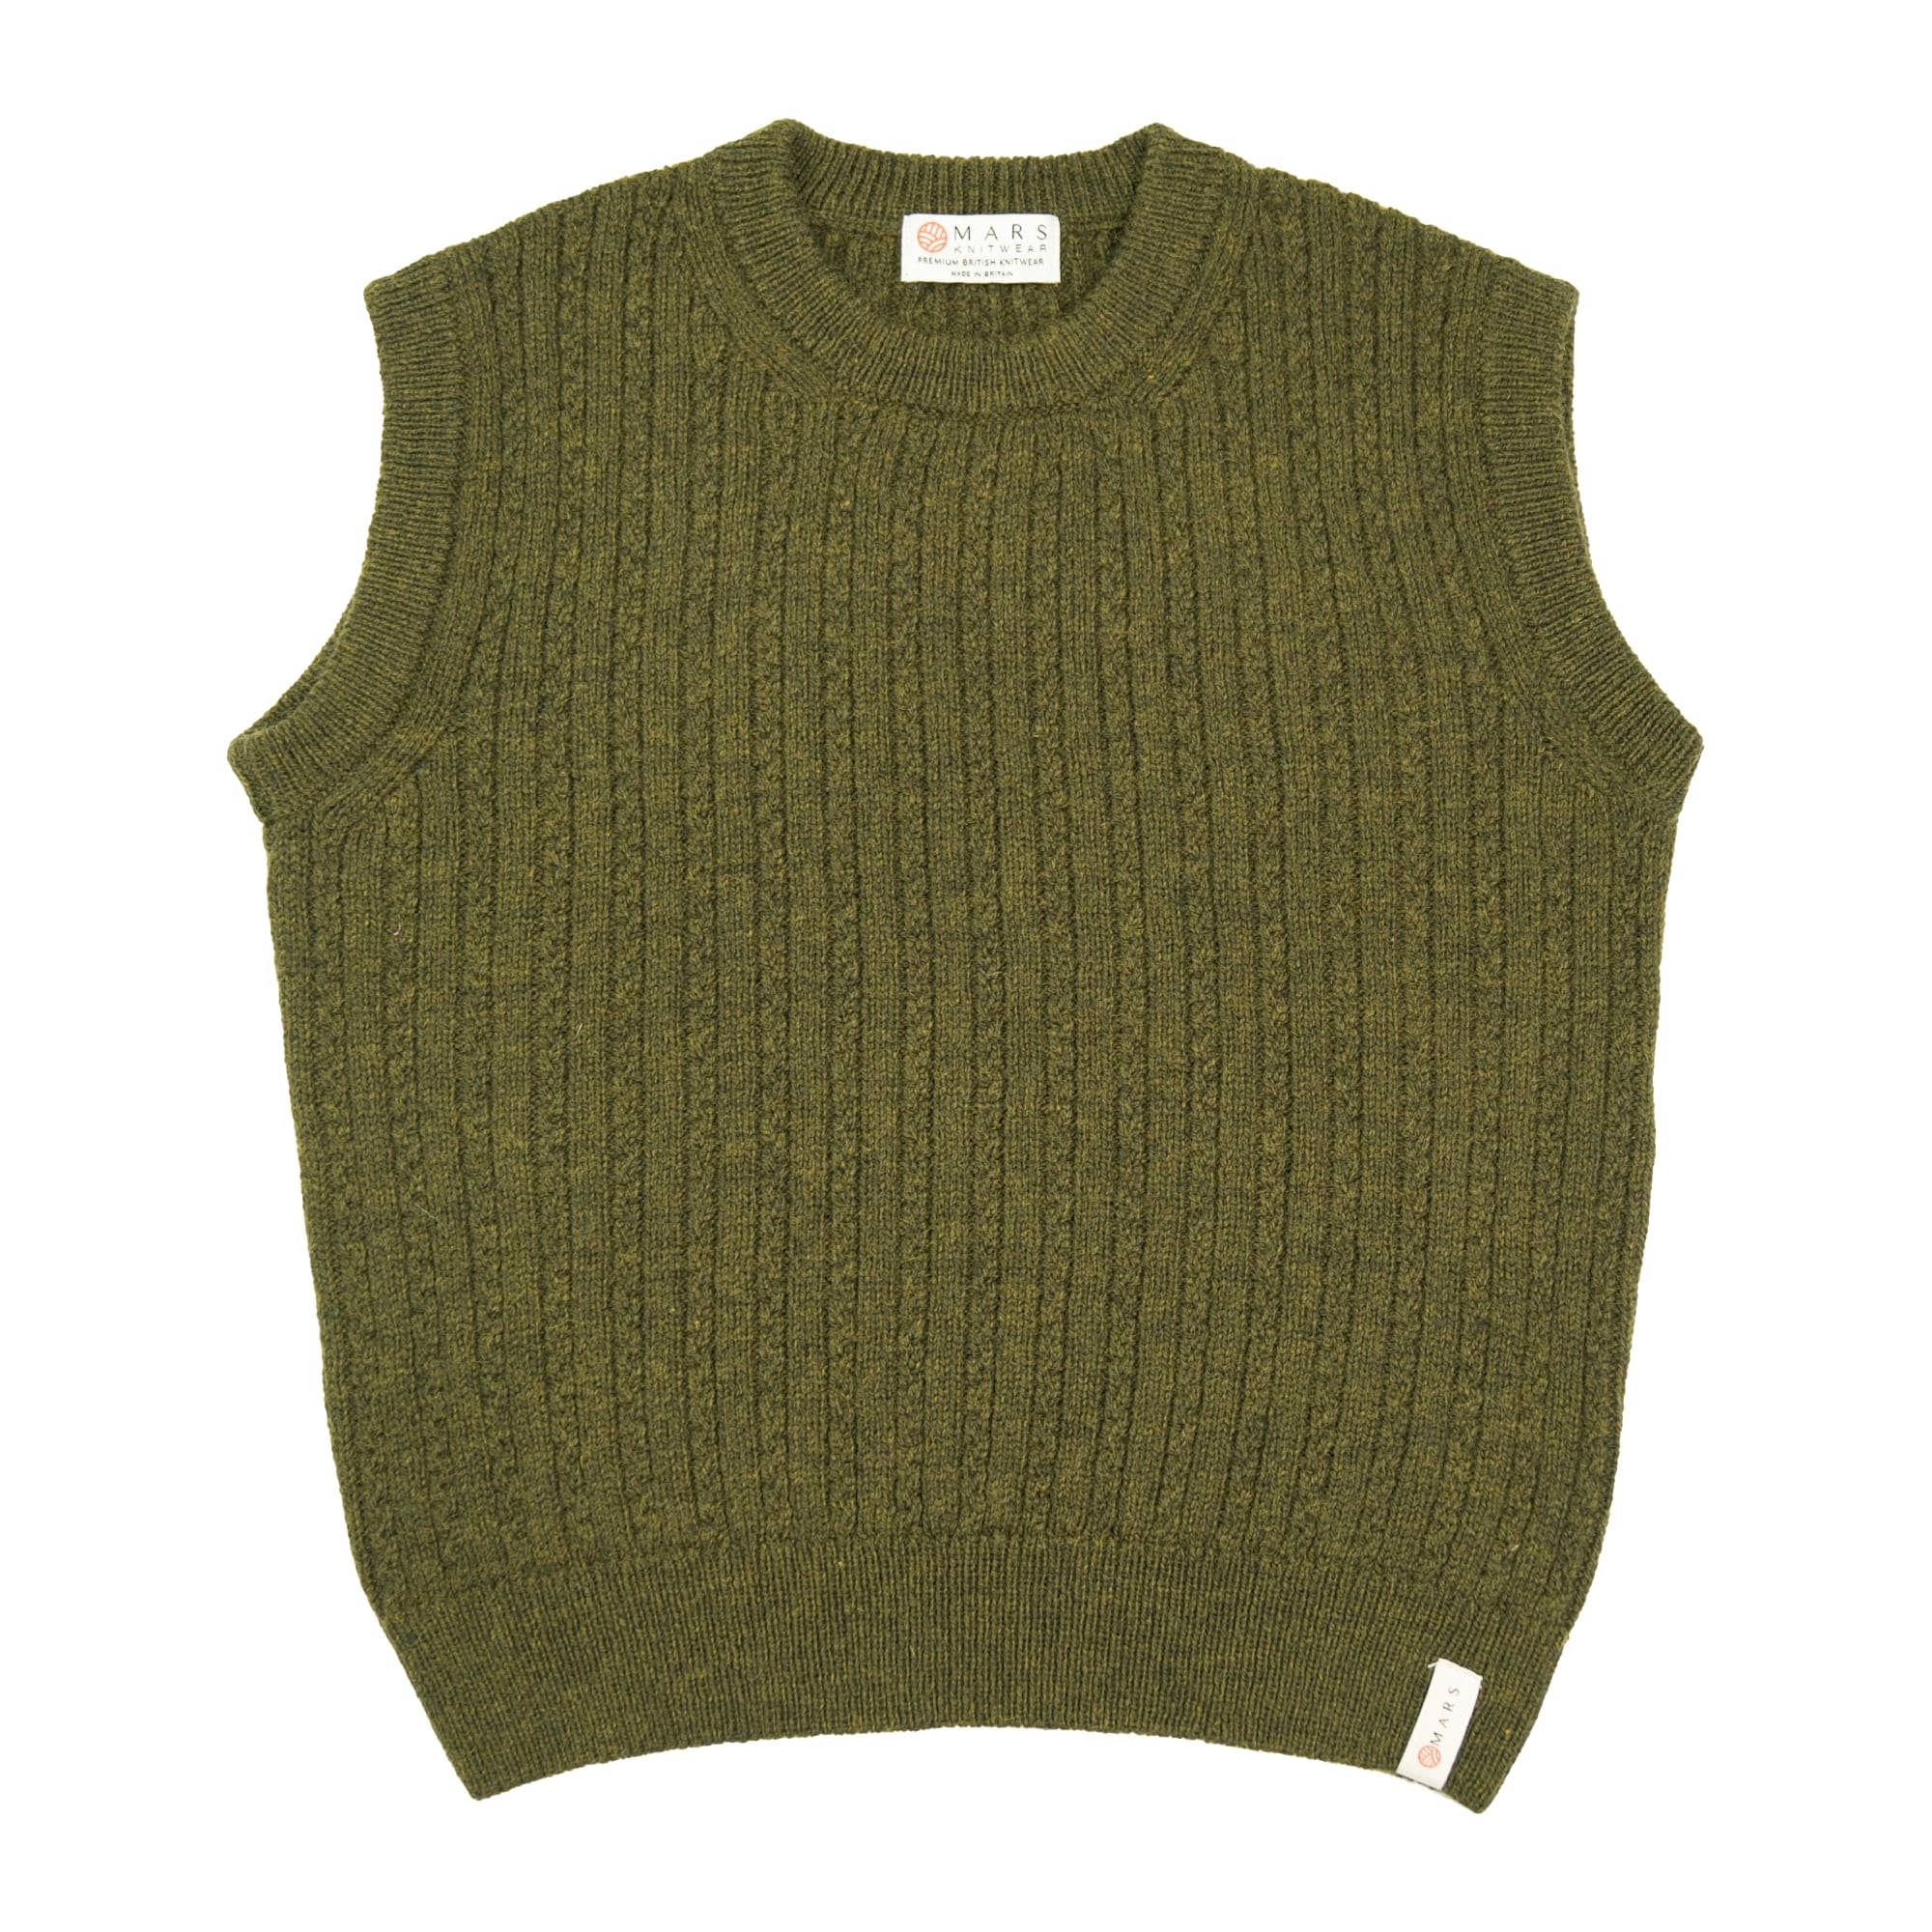 Mars Knitwear - Merino Wool Cable Sleeveless Jumper - Green Melange - Ensemble Studios